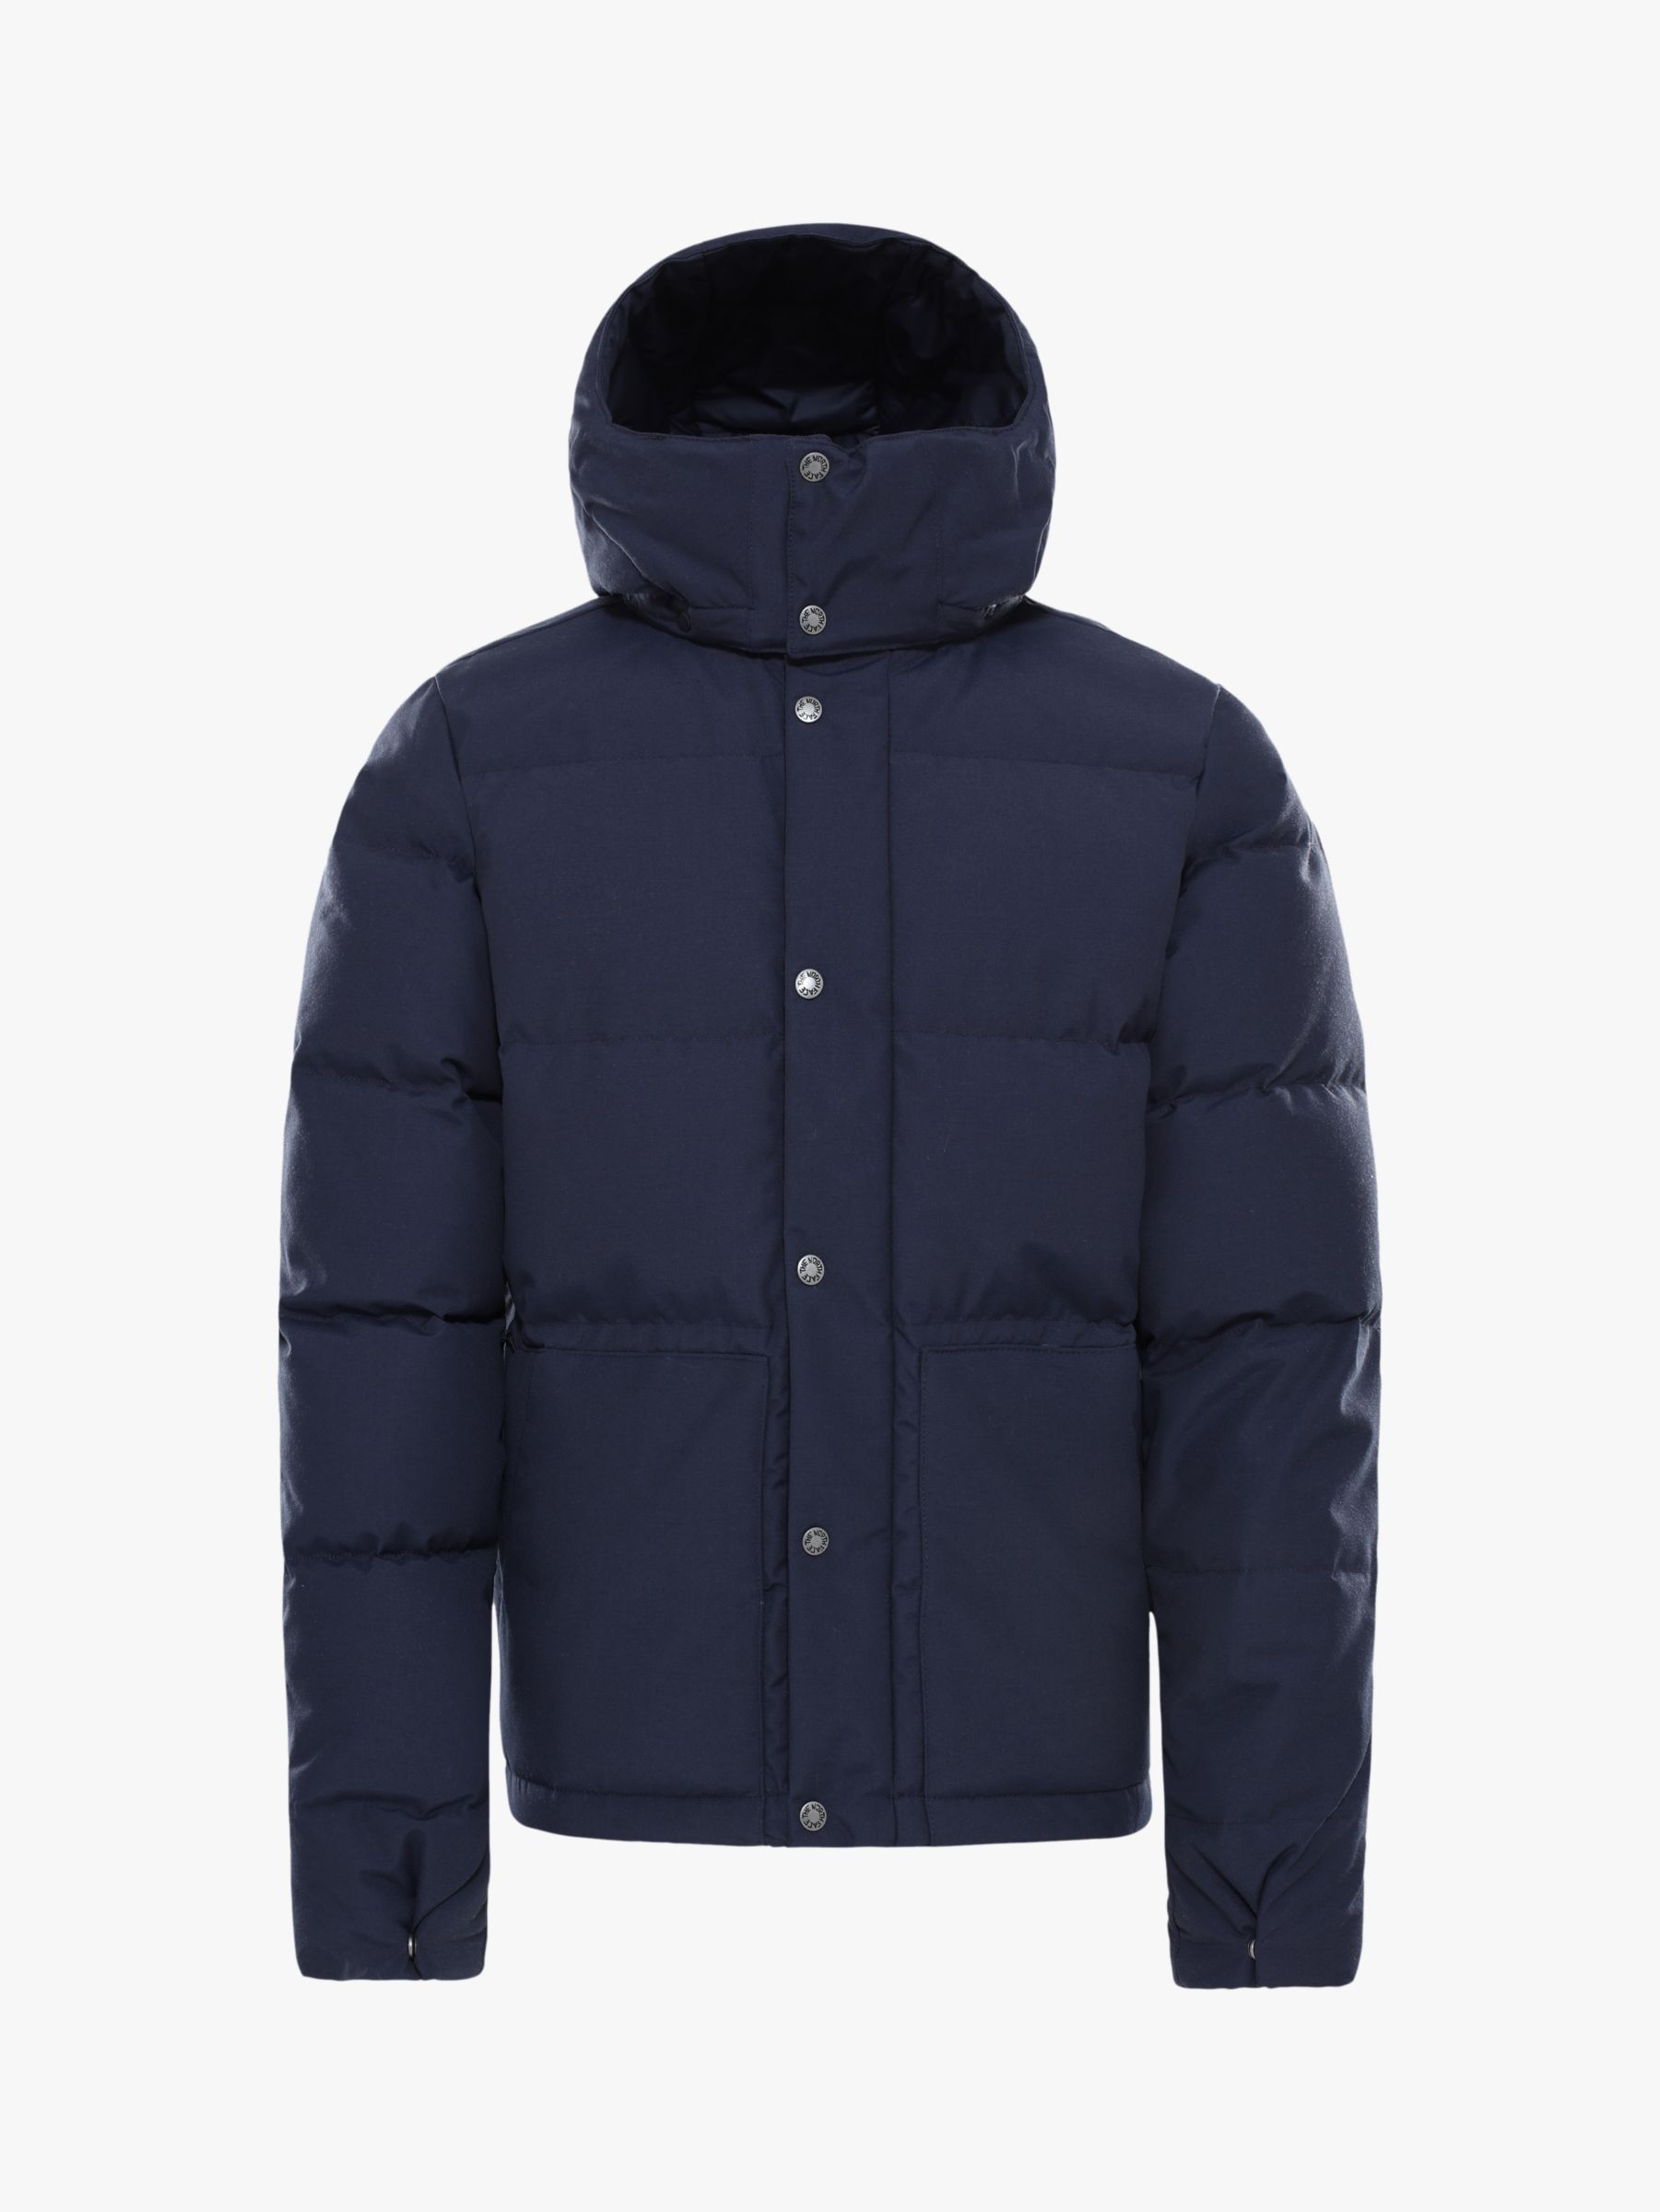 Mens The North Face Coats Jackets John Lewis Partners